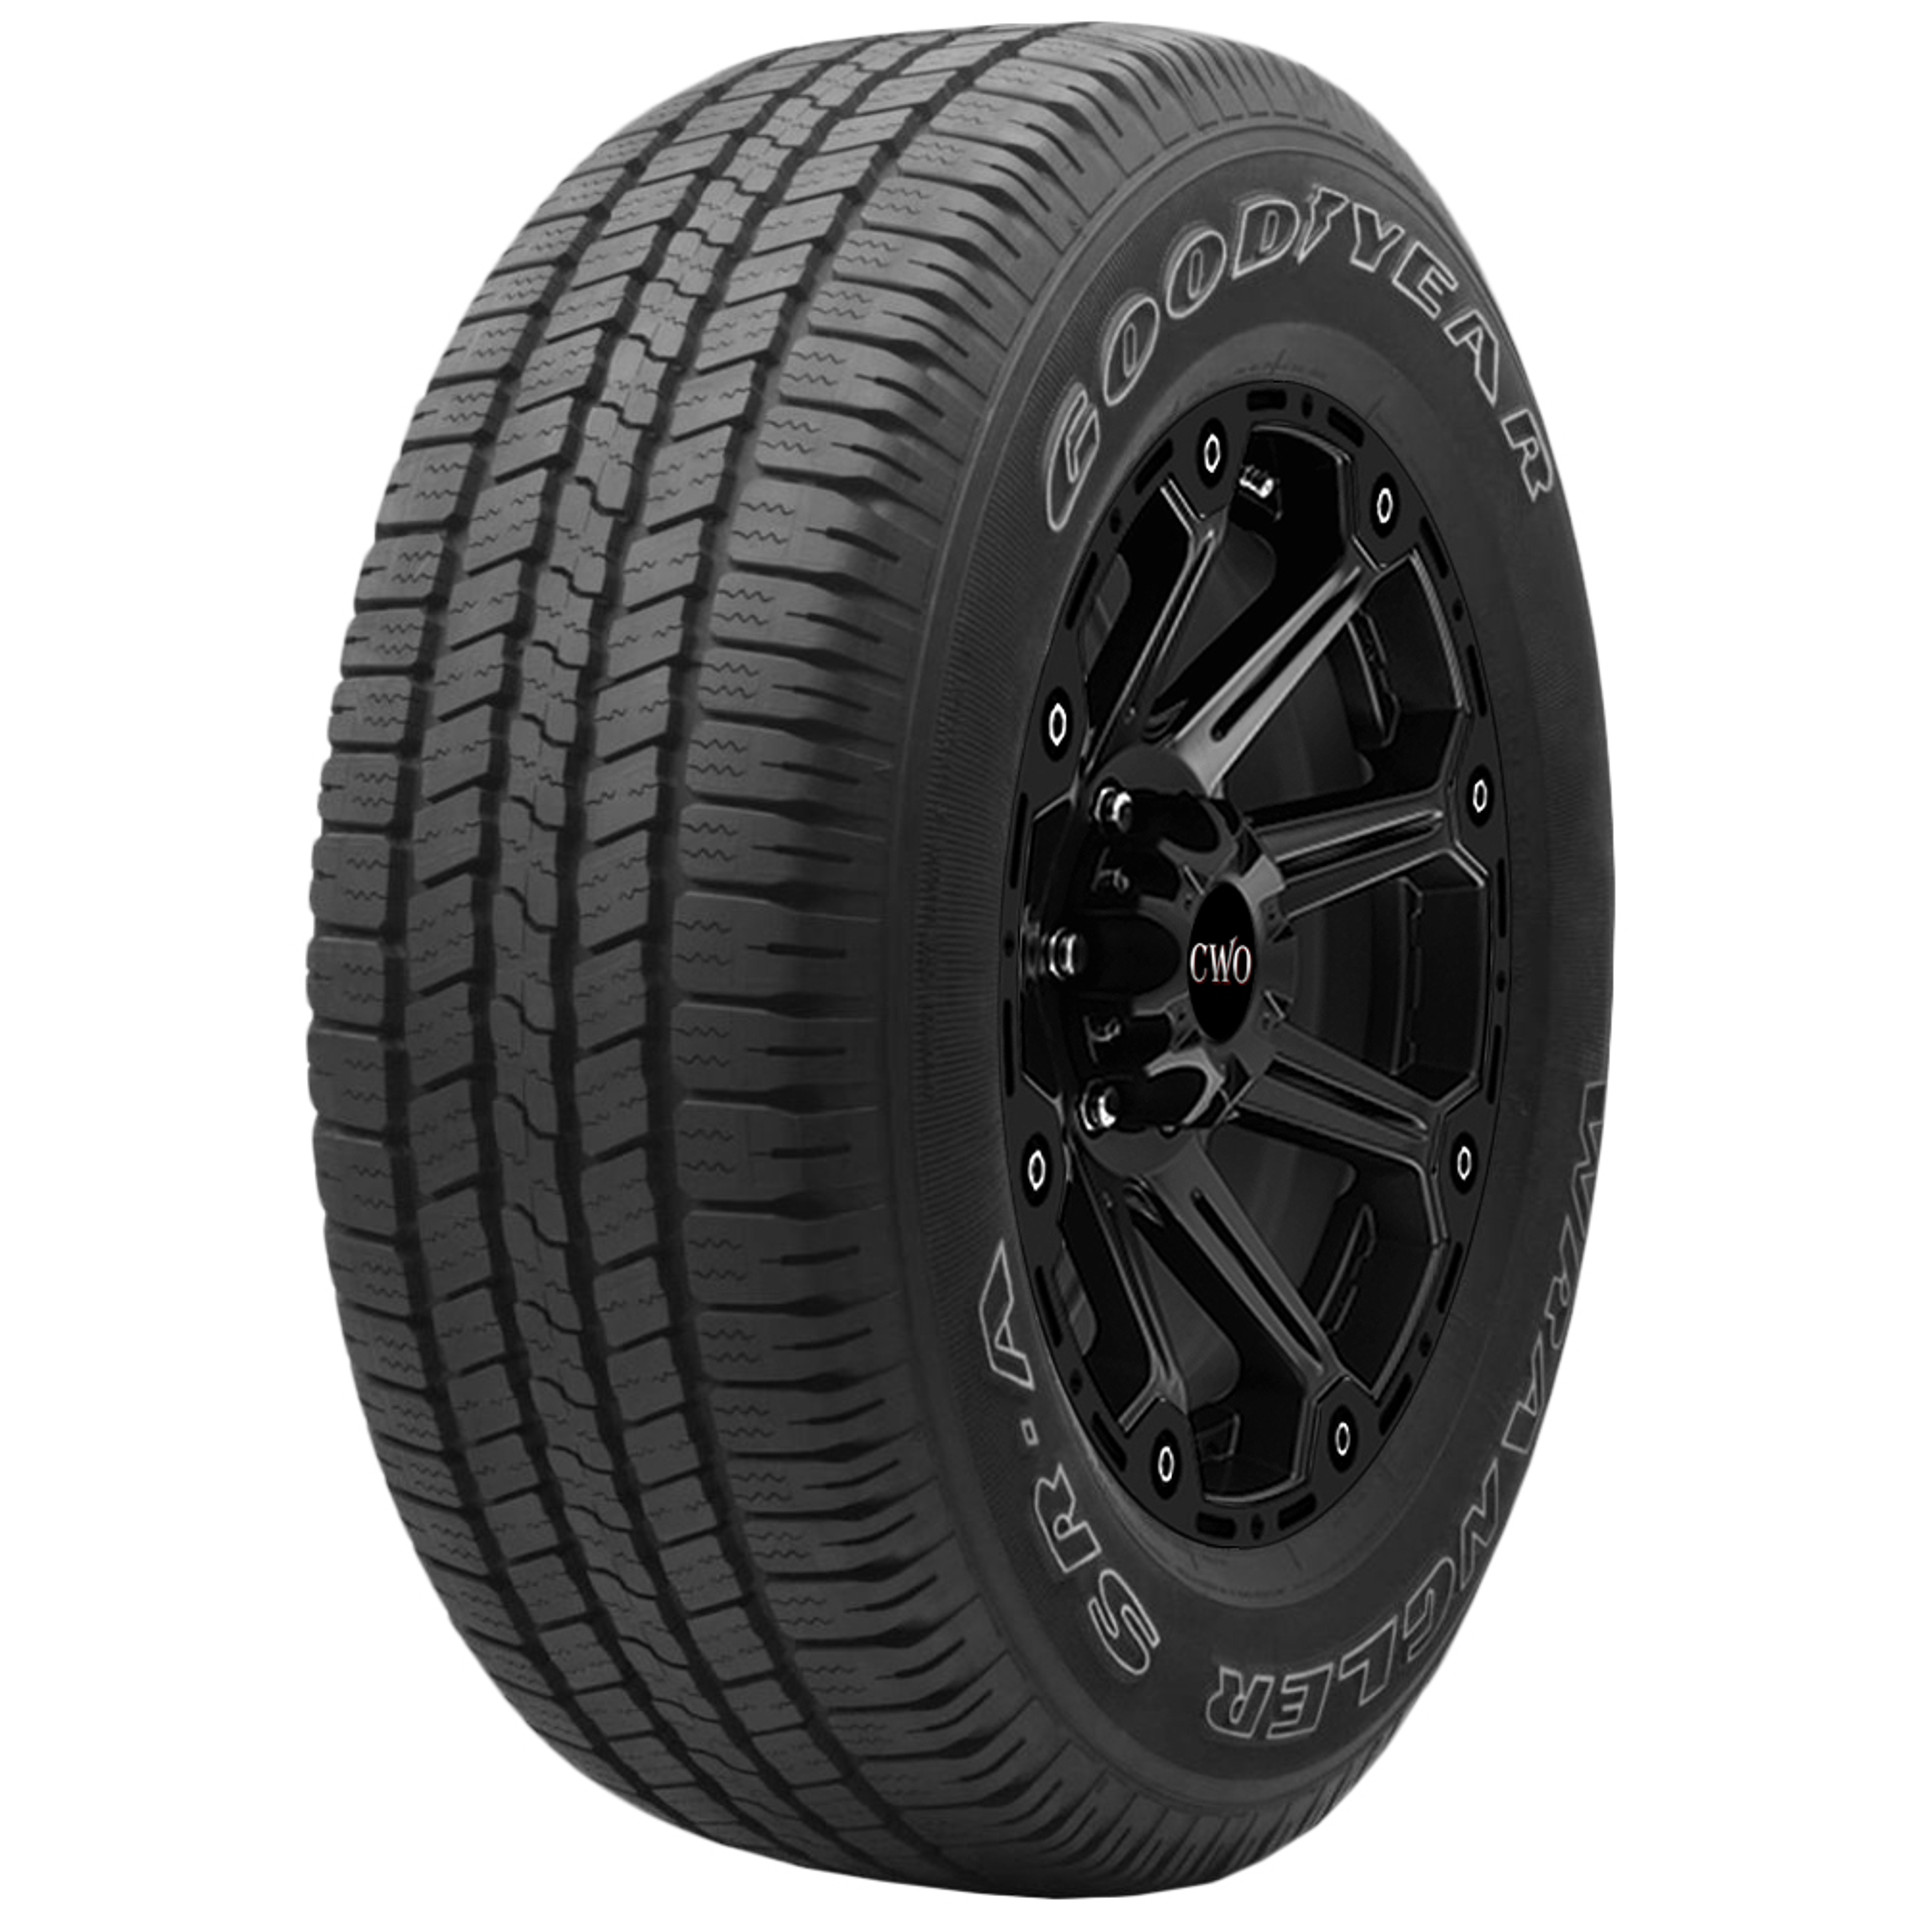 Goodyear Wrangler SR A Tire P265 70R17 183106418